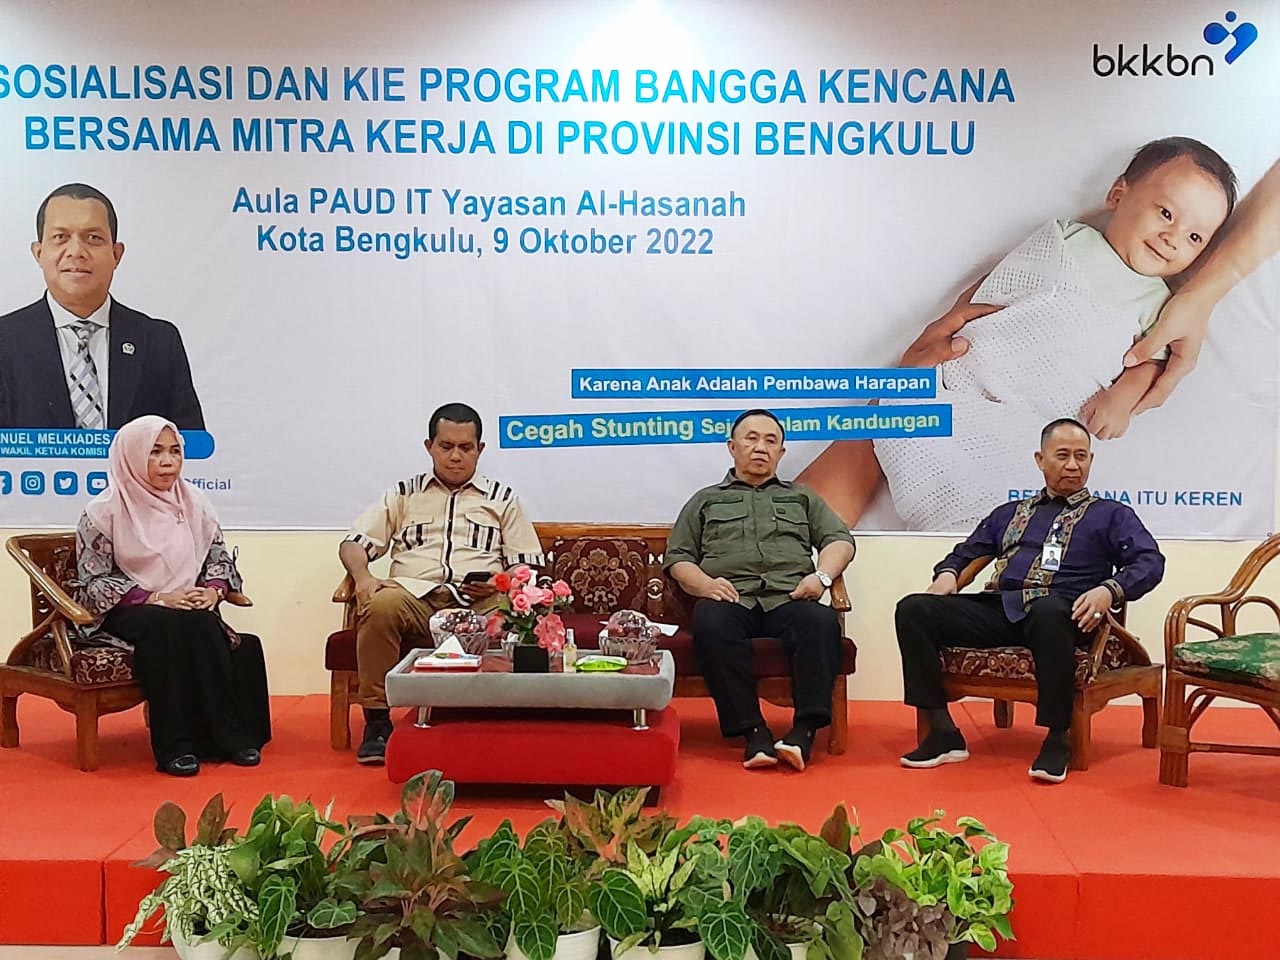  Komisi IX Bersama BKKBN Sosialisasi dan KIE Program Bangga Kencana di Bengkulu